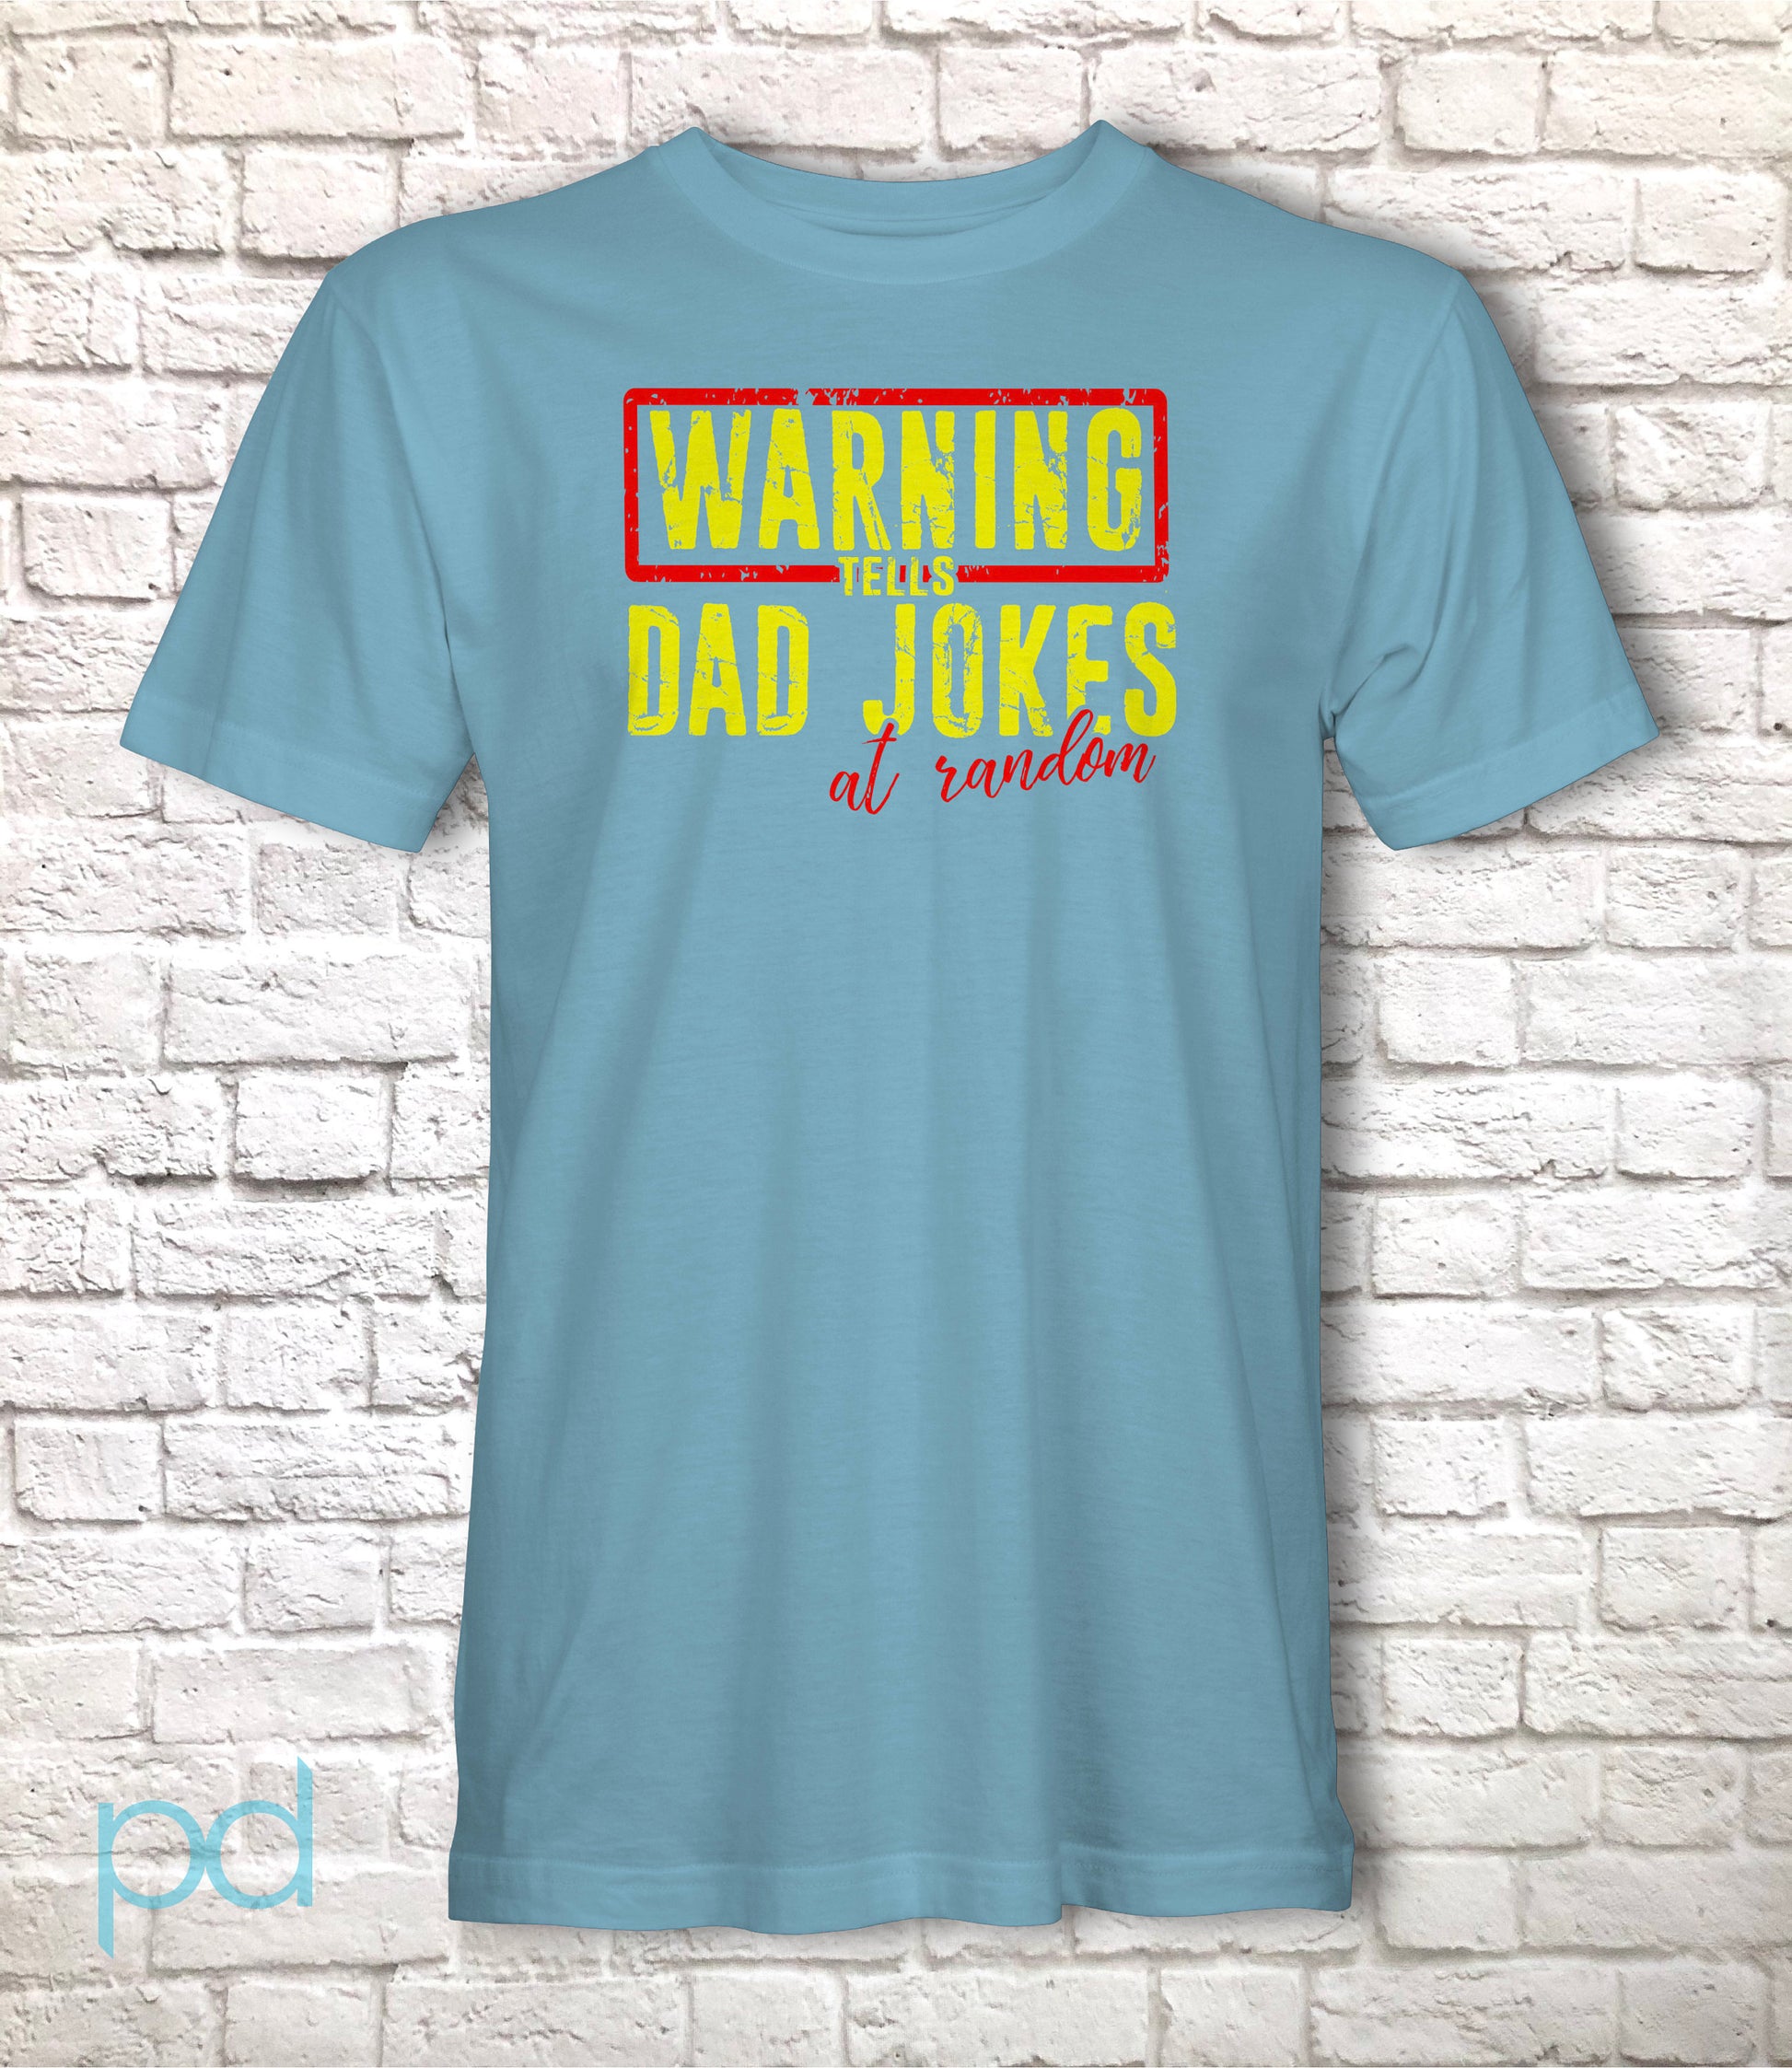 Dad Joke T-Shirt, Funny Warning Tells Random Dad Jokes Gift Idea, Humorous Father Graphic Print Design Printed on Tee Shirt Top